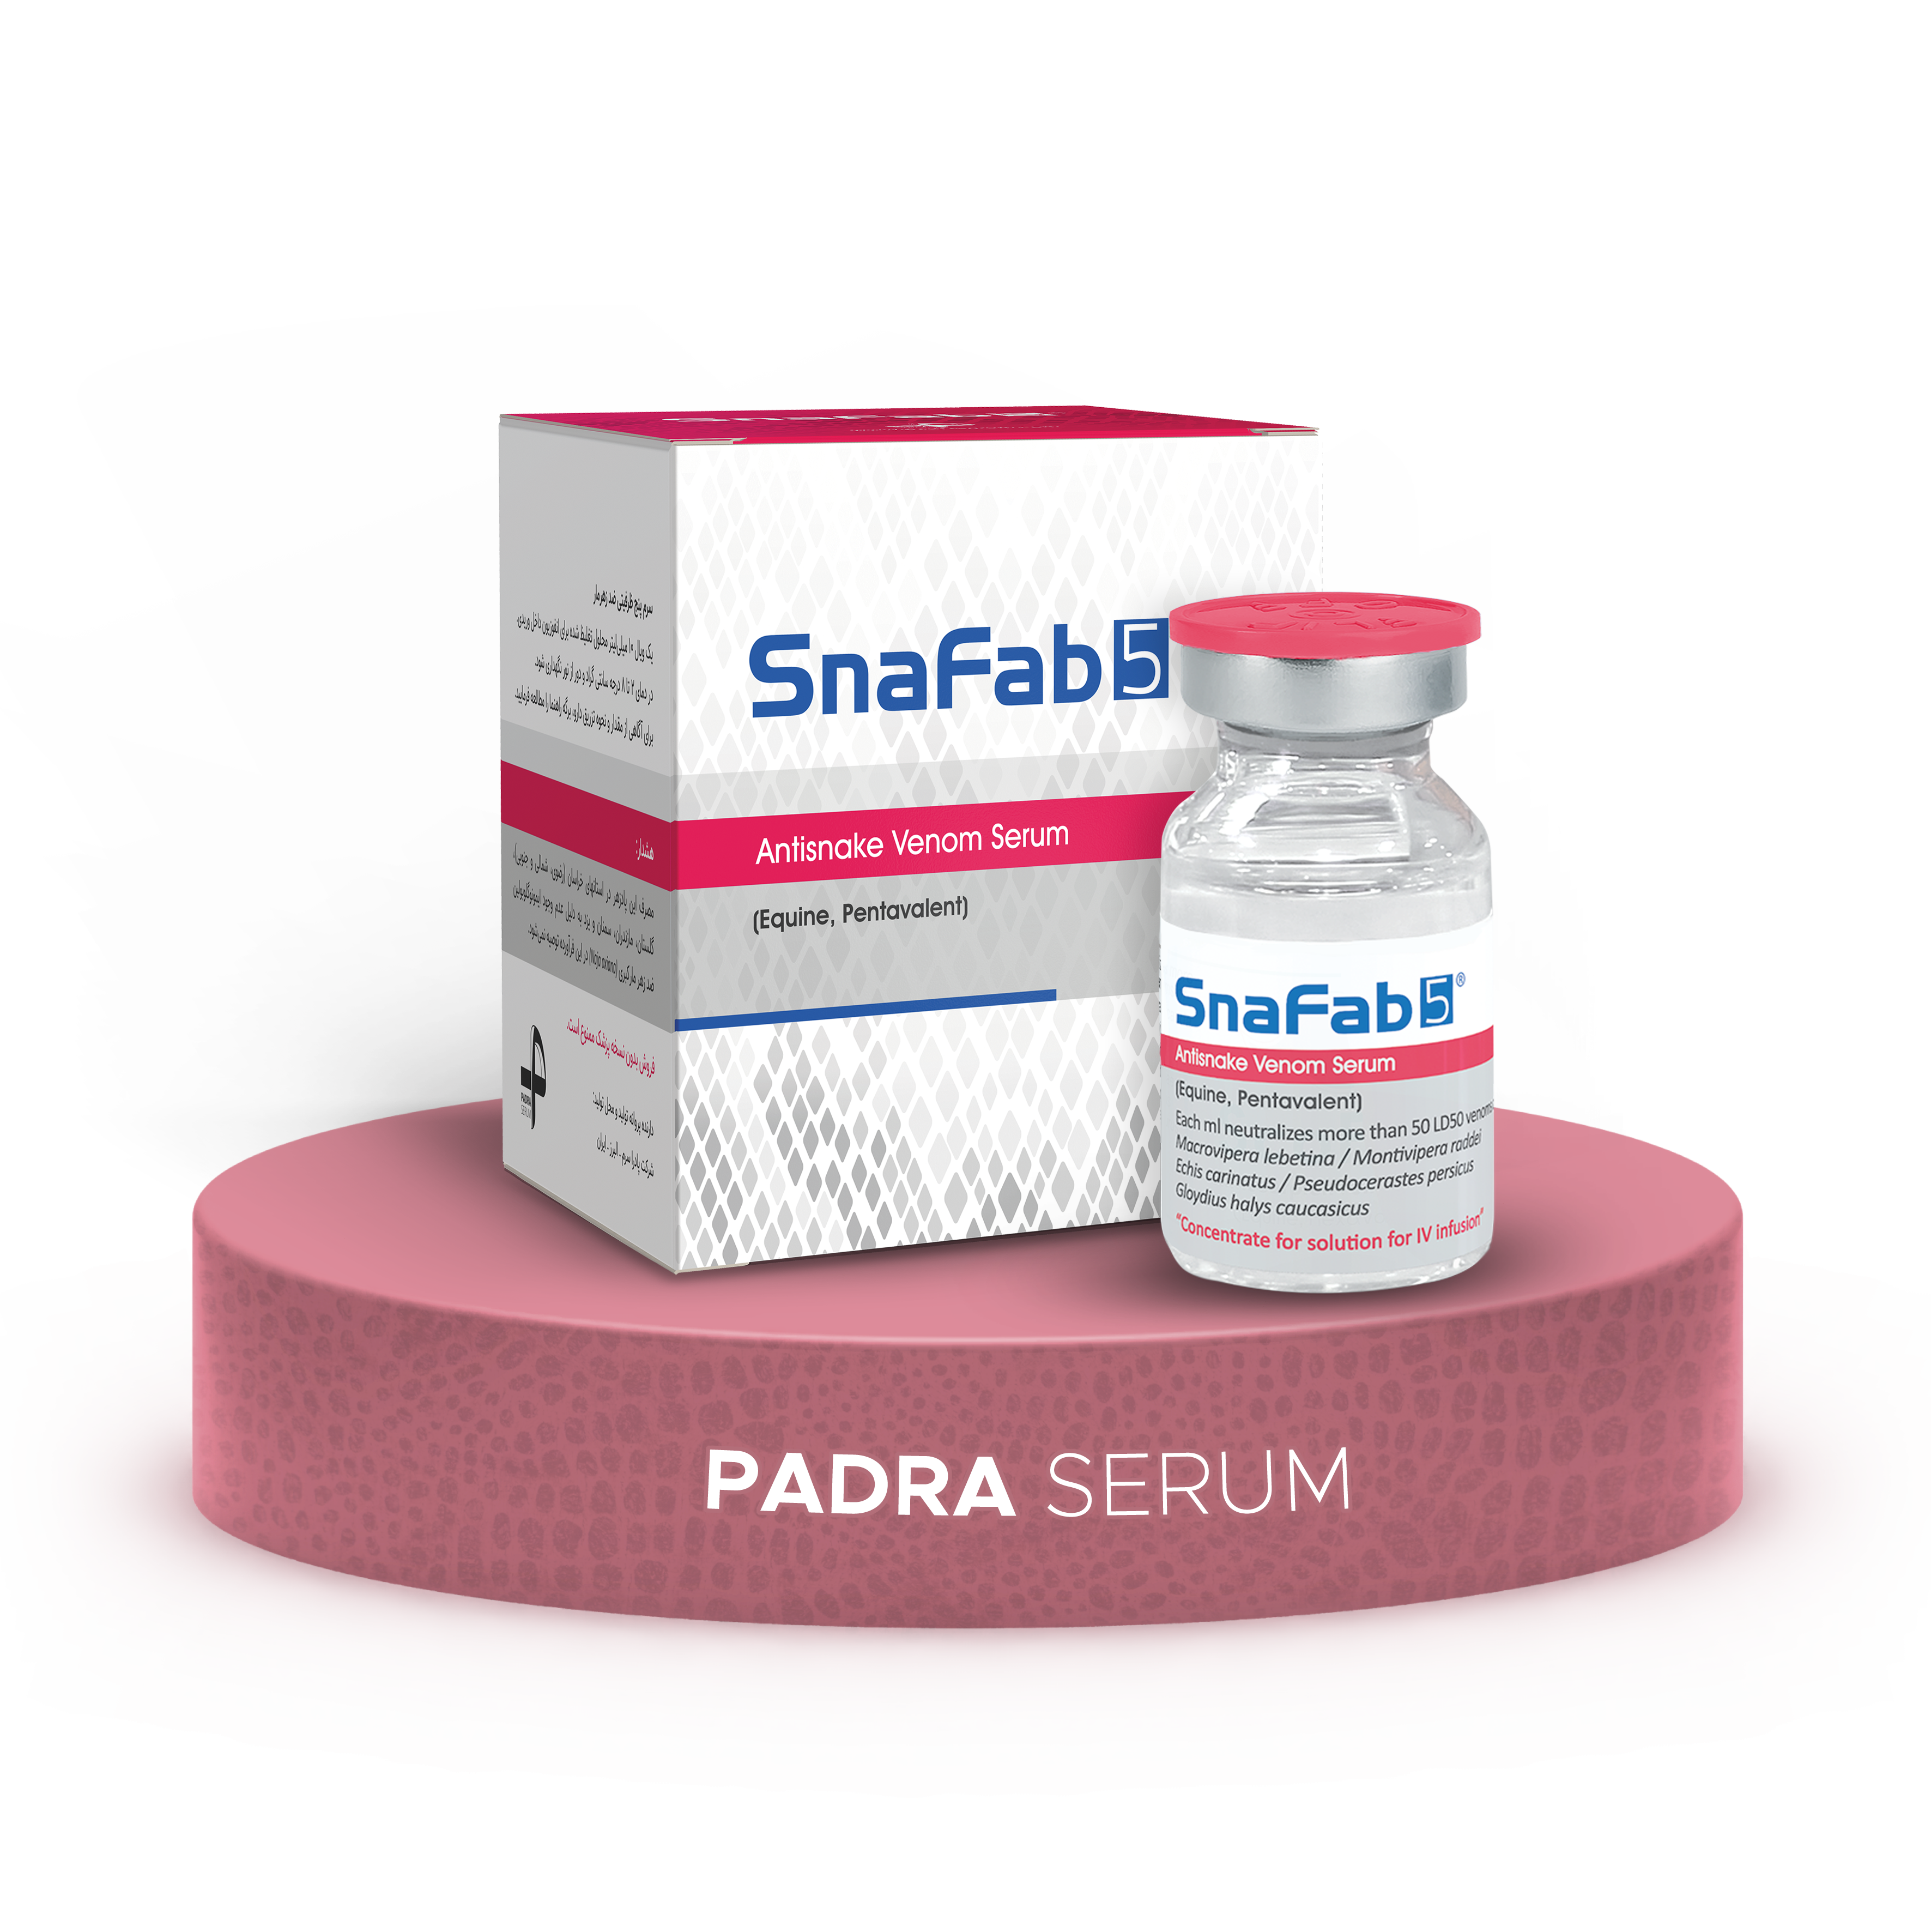 SnaFab Box & SnaFab Vial (Pentavalent, Equine, Antisnake Venom Serum) - اسنافب پنج ظرفیتی و اسبی - پادزهر مار - پادرا سرم البرز - Padra Serum Alborz